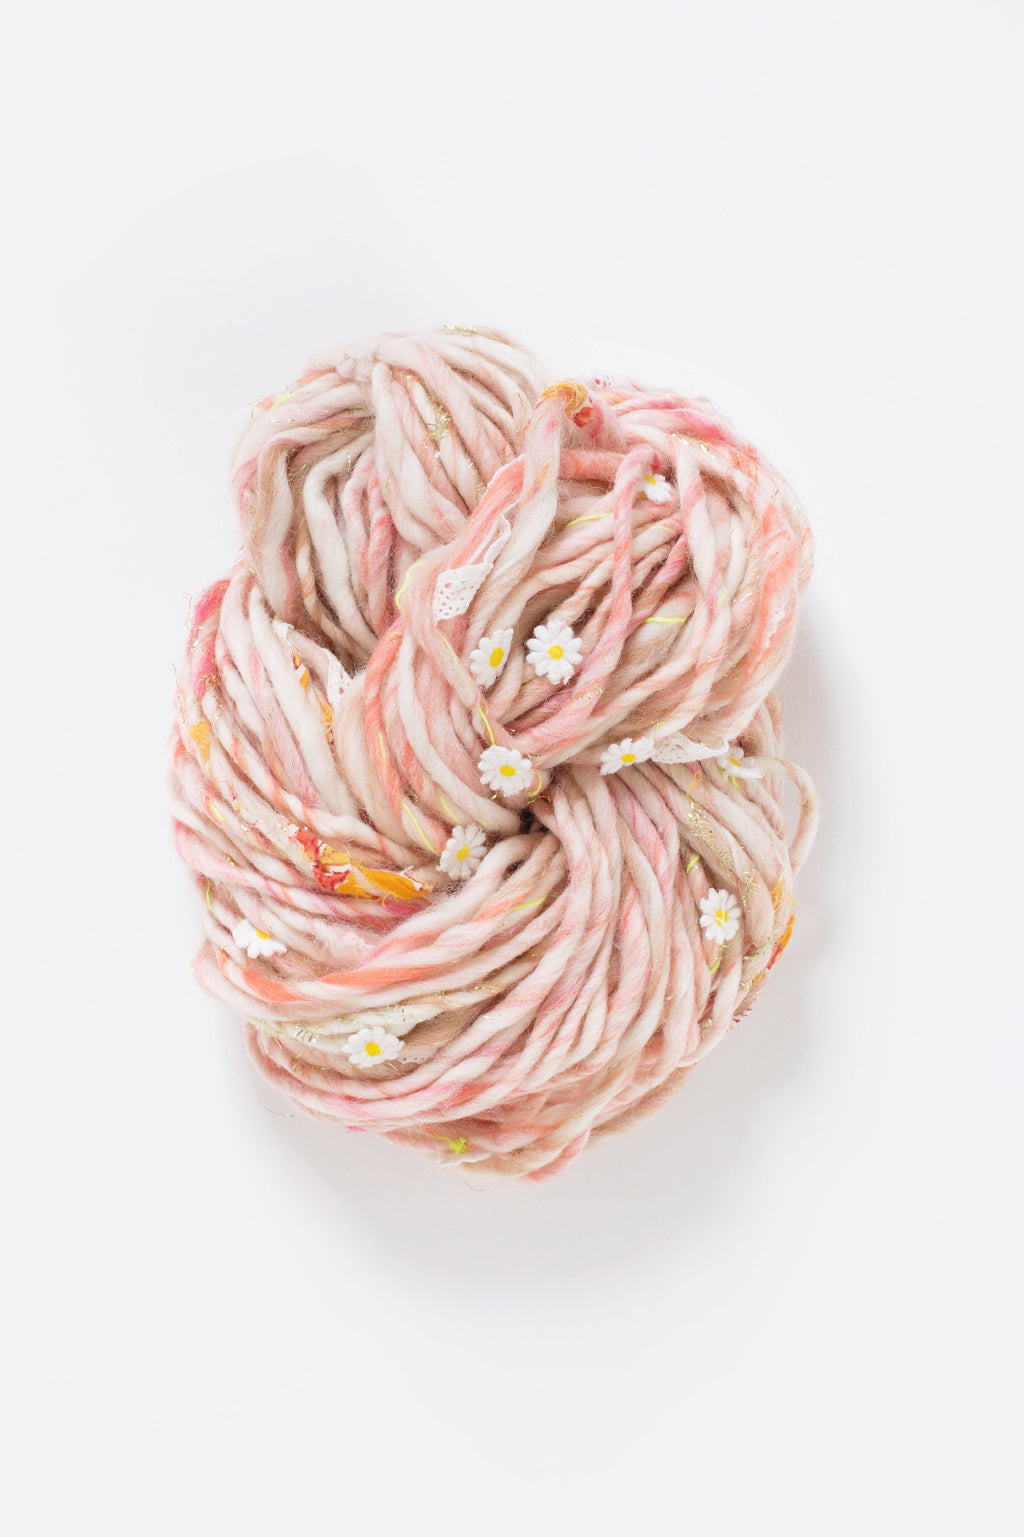 Daisy Chain Yarn in Natural Aura by Knit Collage - Chunky bulky Hand knitting yarn